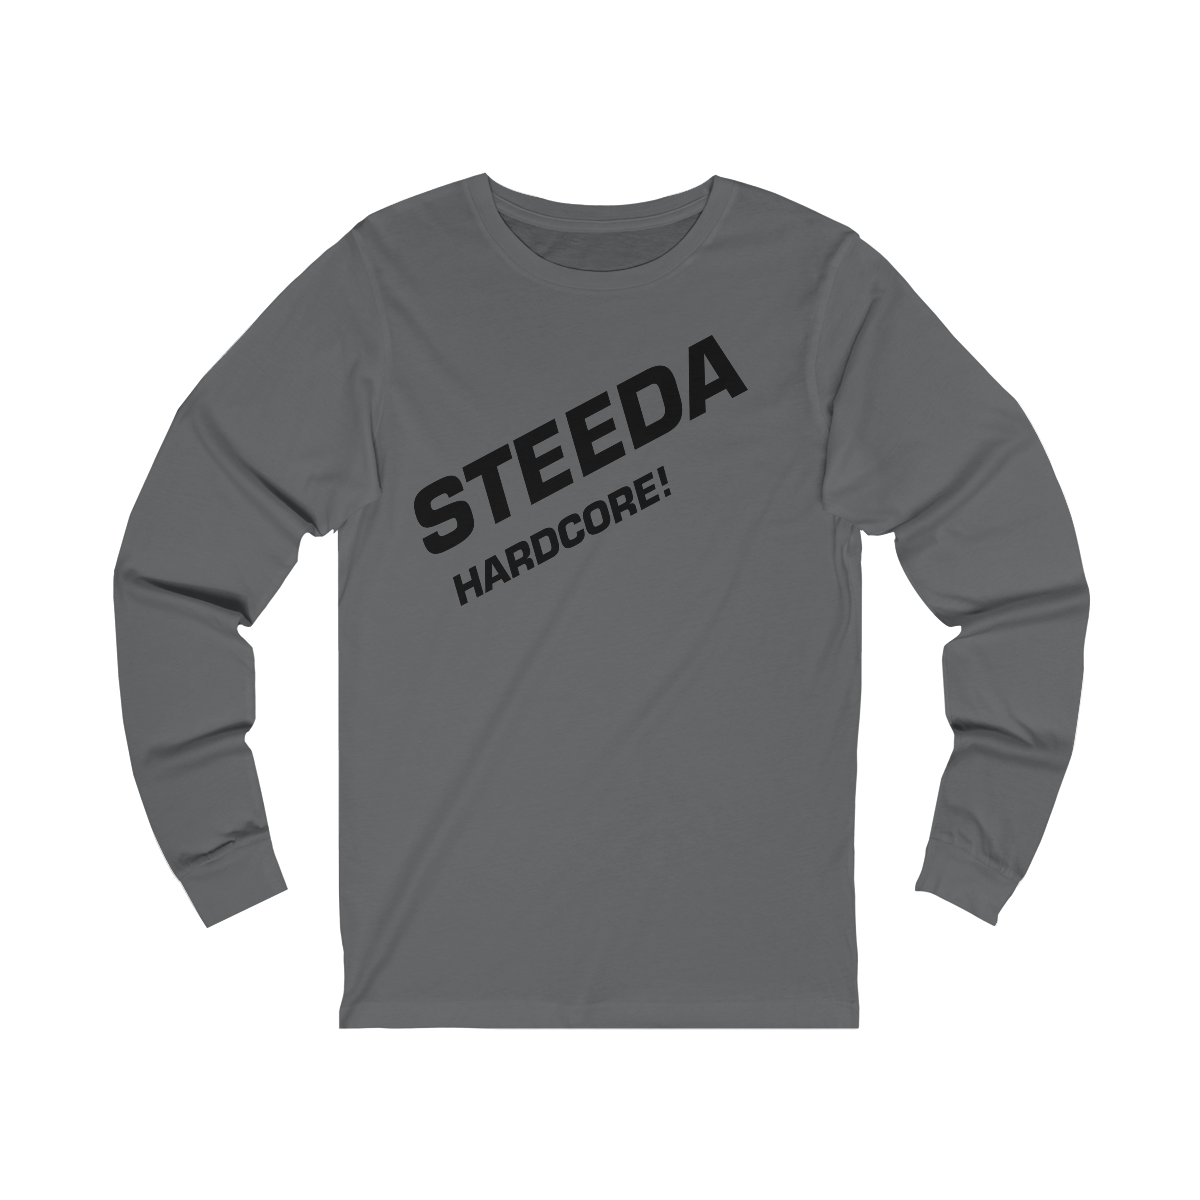 Steeda Unisex "Hardcore!" Long Sleeve T Shirt - Black / Grey